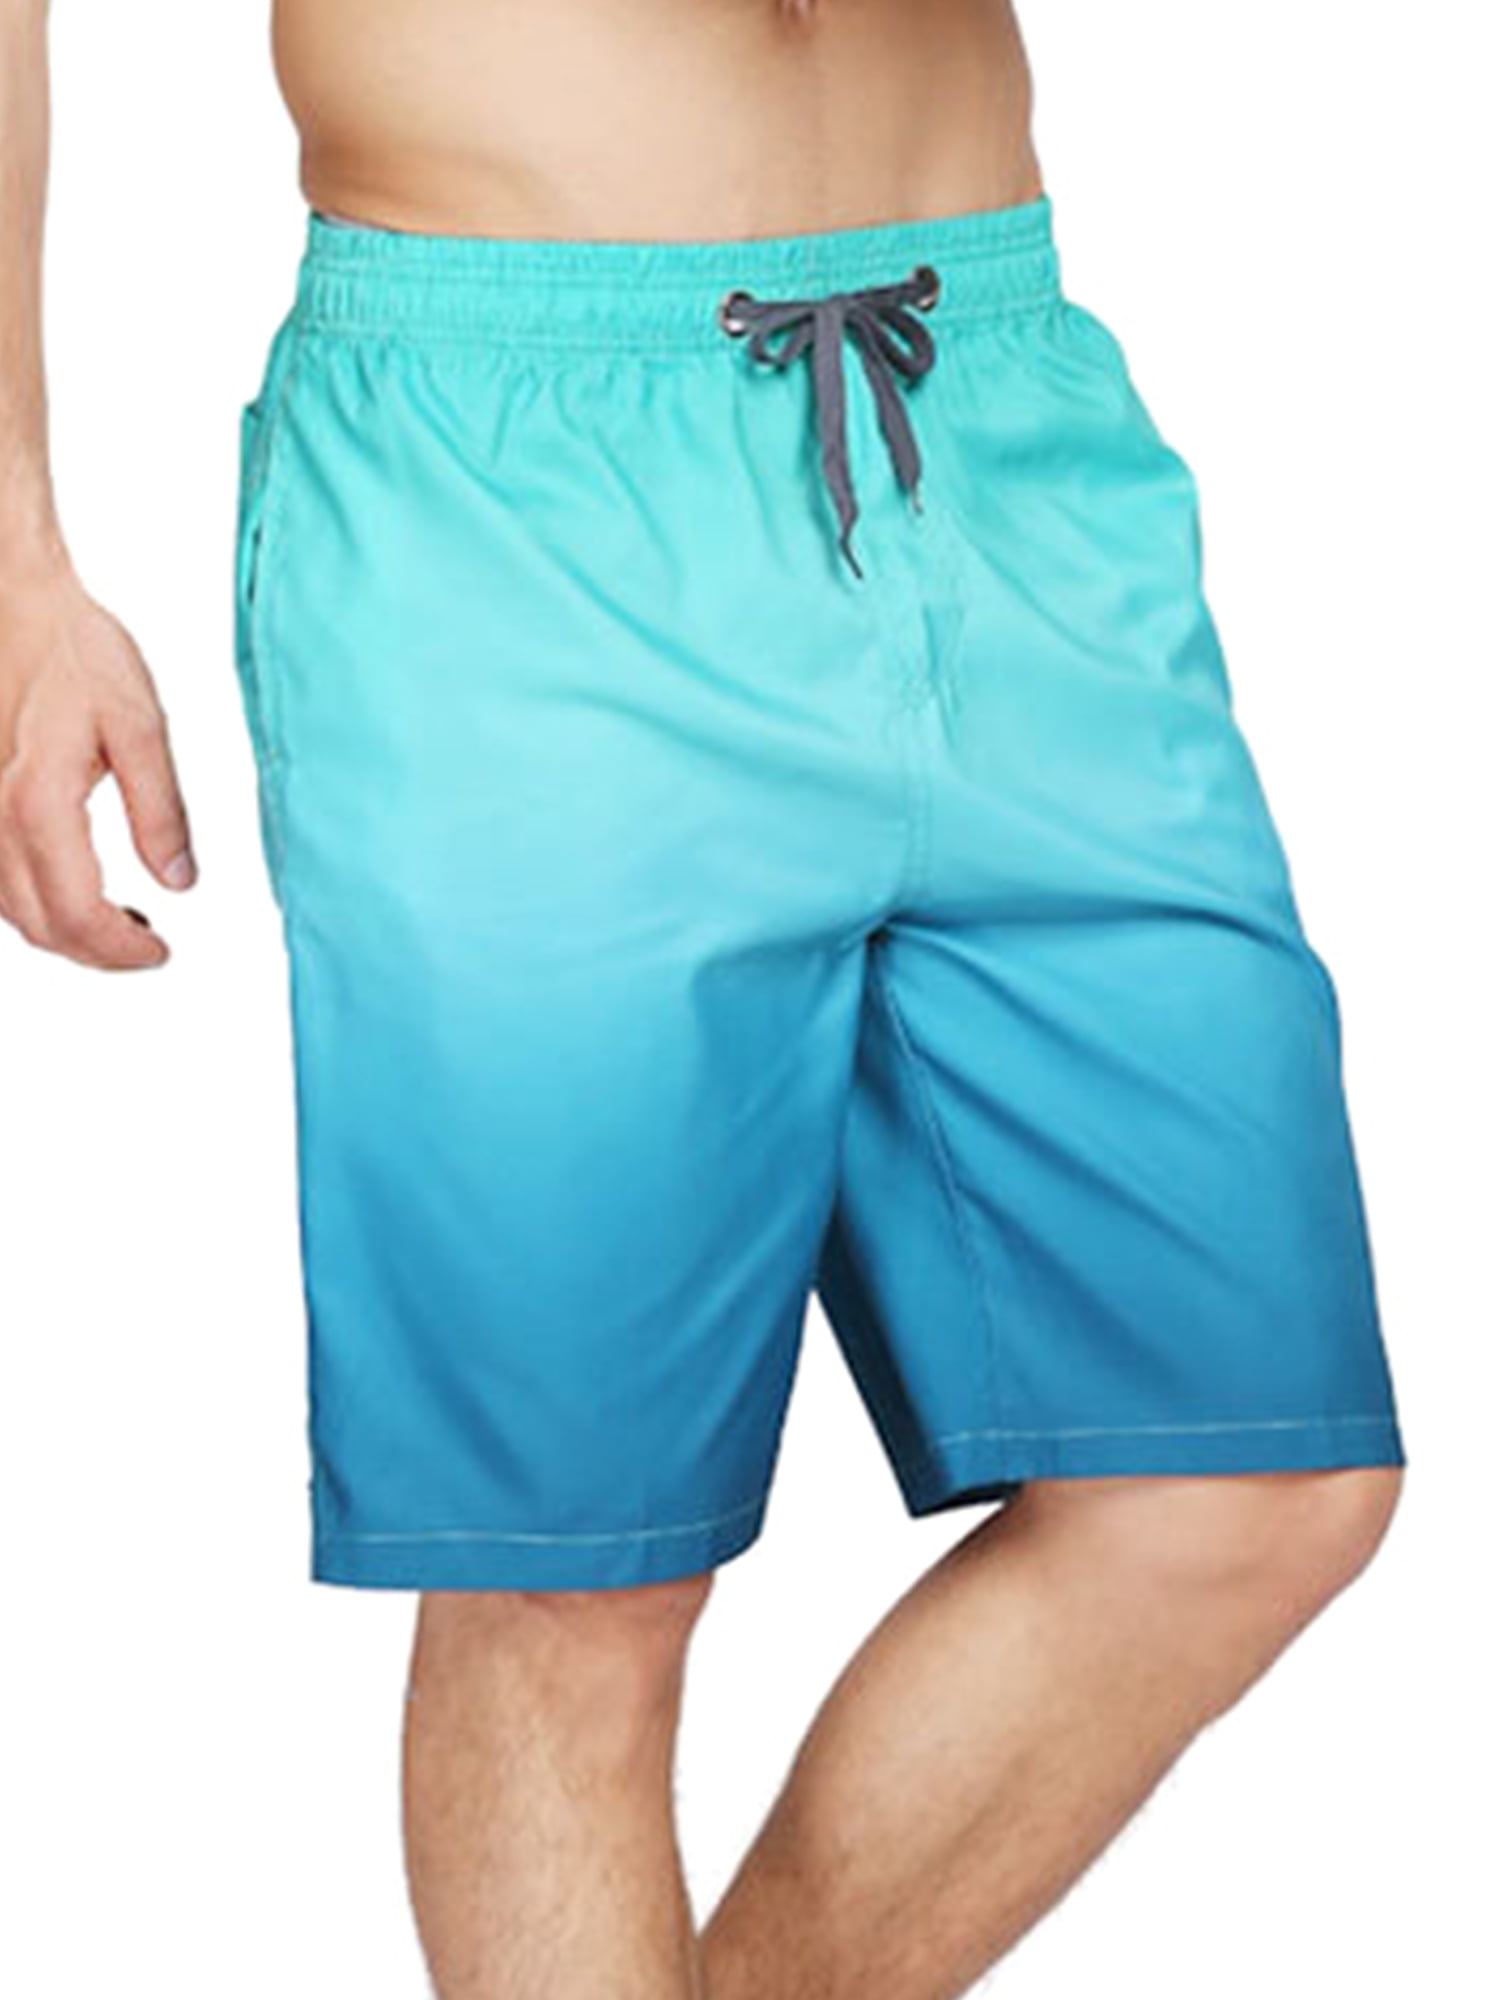 Mens Blue Lighting Popular Quick Dry Swim Trunks Elastic Drawstring Cargo Shorts with Pocket